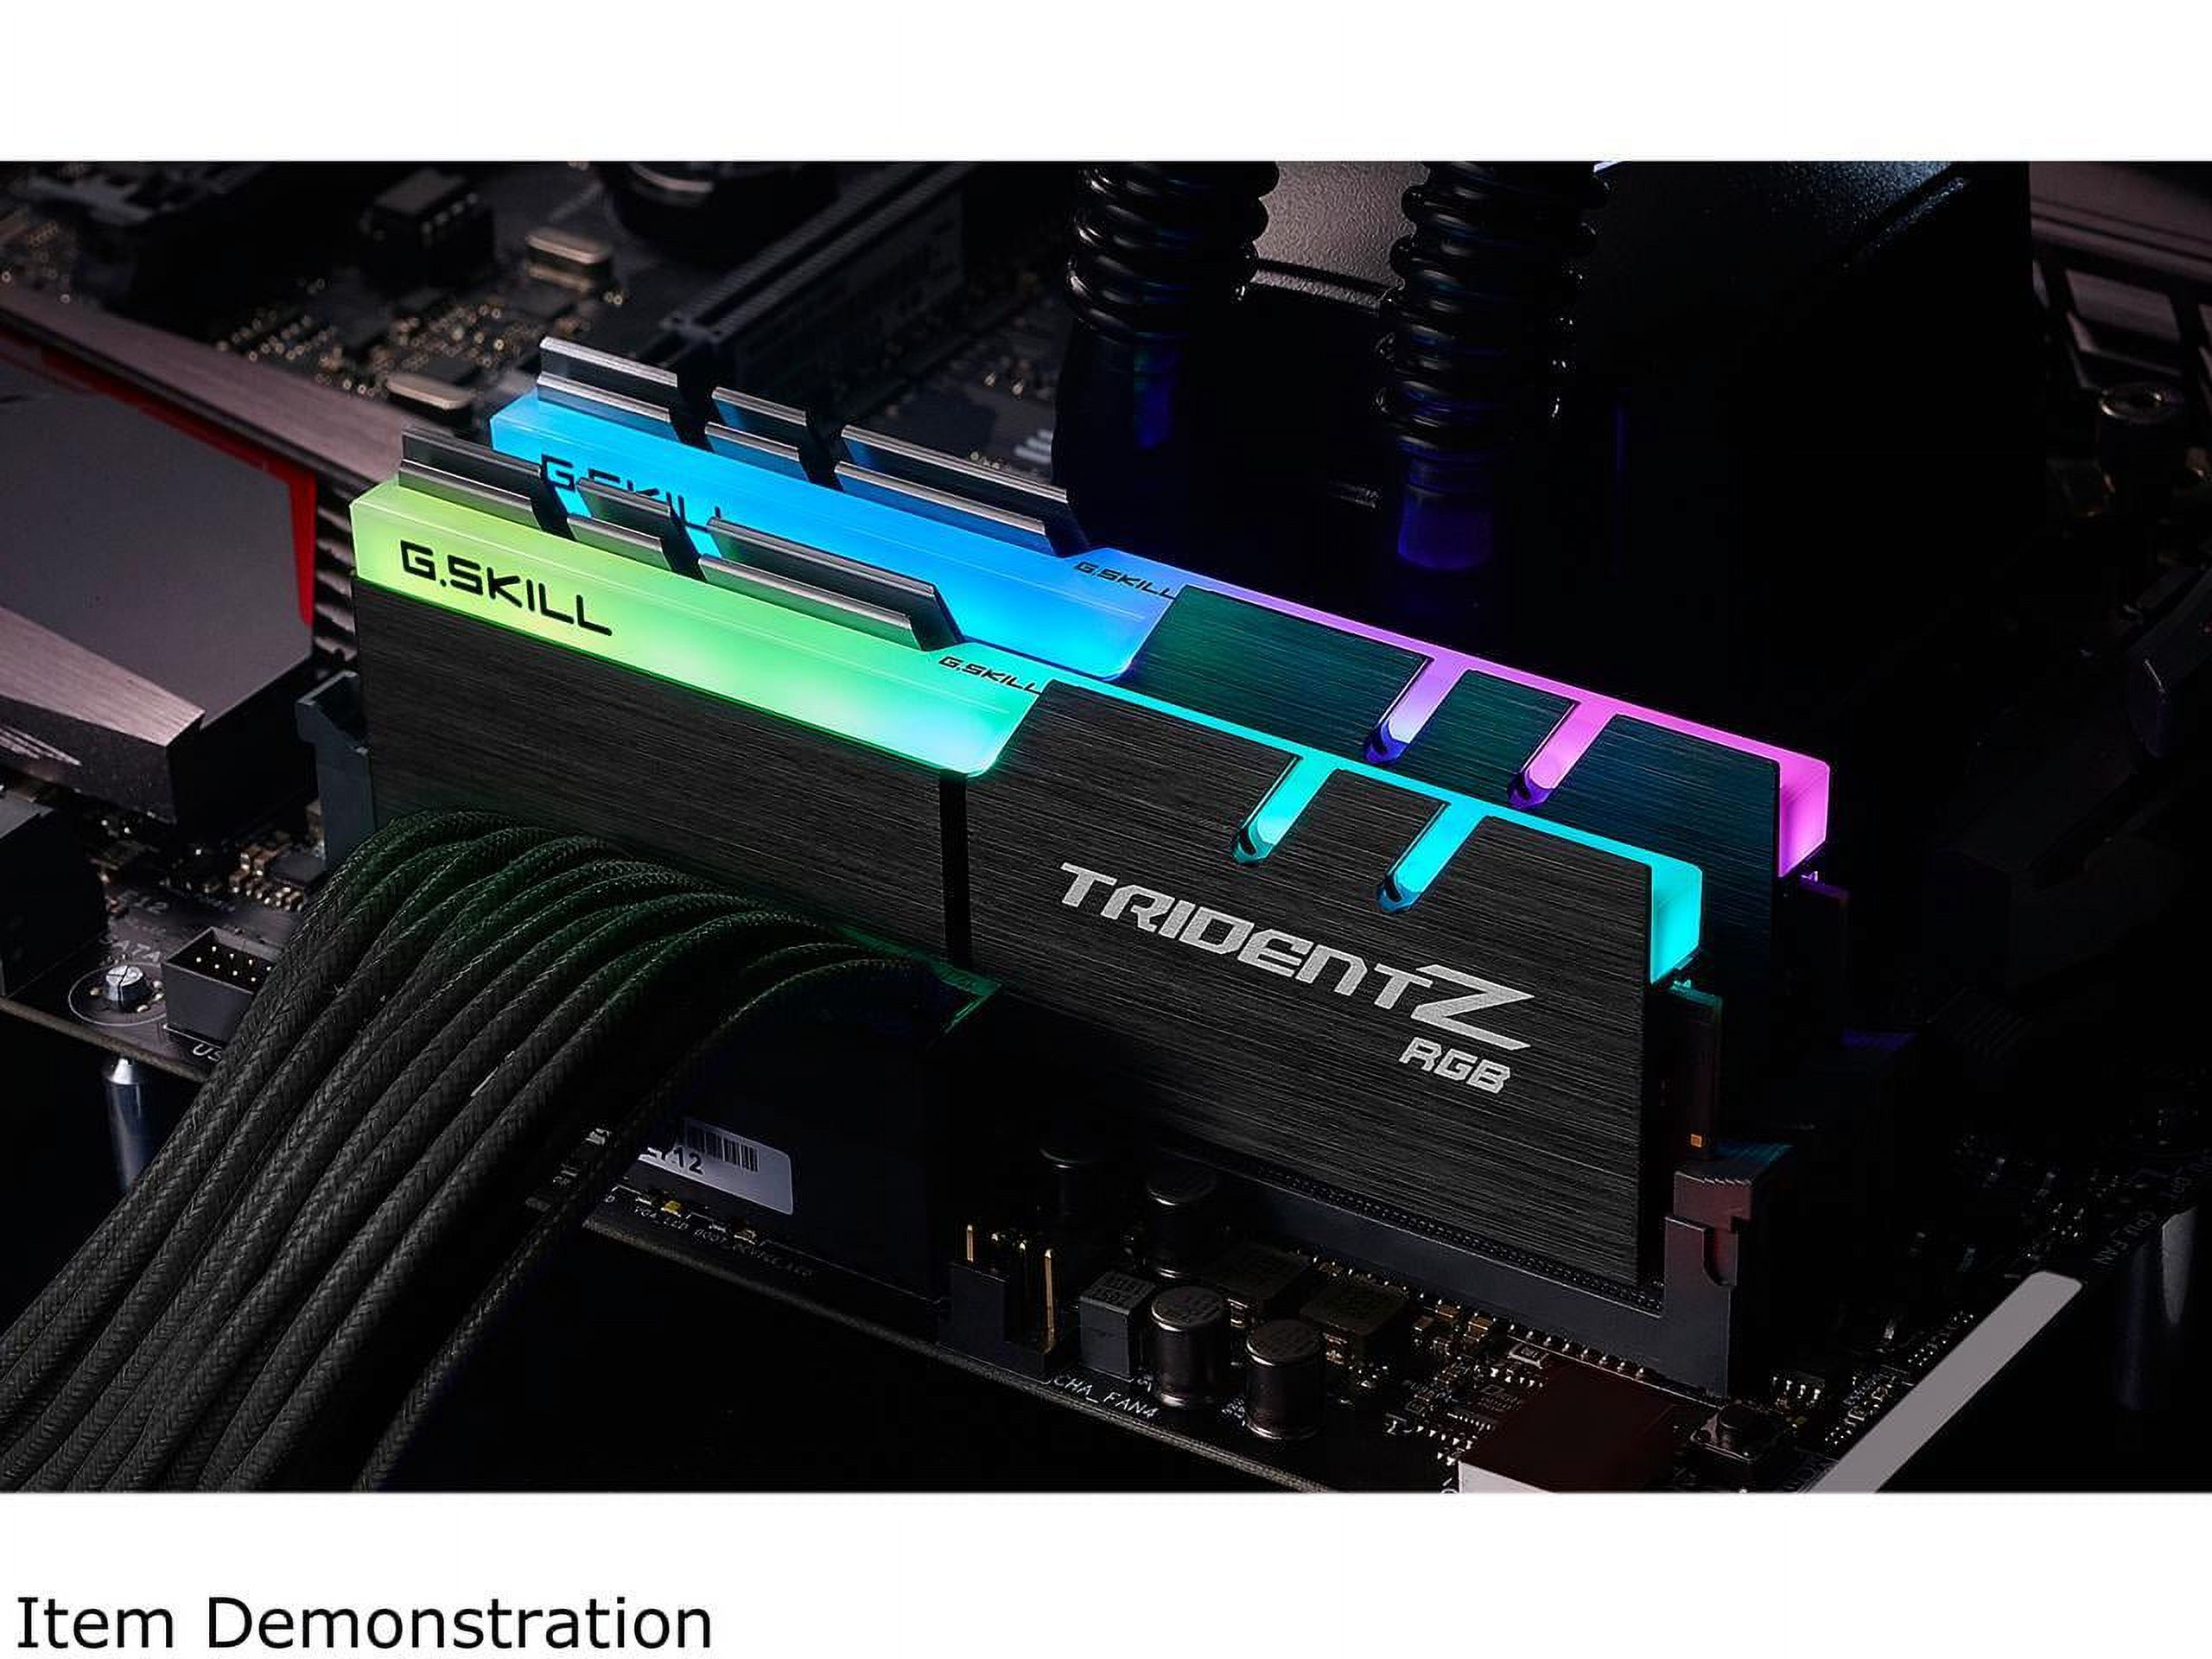 G.SKILL TridentZ RGB Series 16GB (2 x 8GB) 288-Pin PC RAM DDR4 3200 (PC4 25600) Desktop Memory Model F4-3200C16D-16GTZR - image 2 of 2